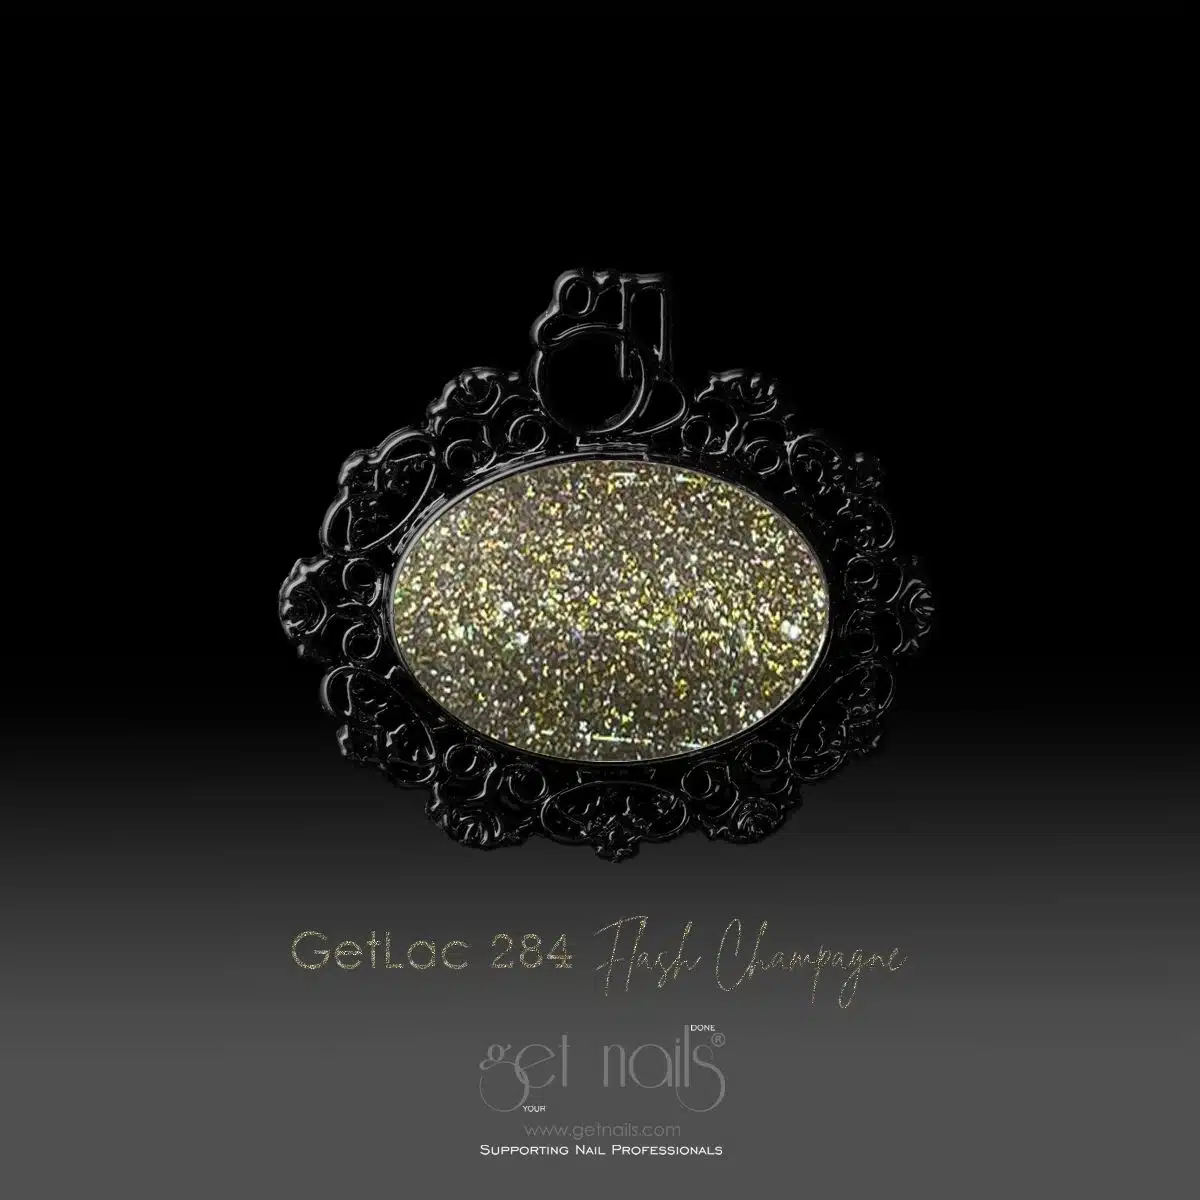 Ottieni Nails Austria - GetLac 284 Flash Champagne 15g